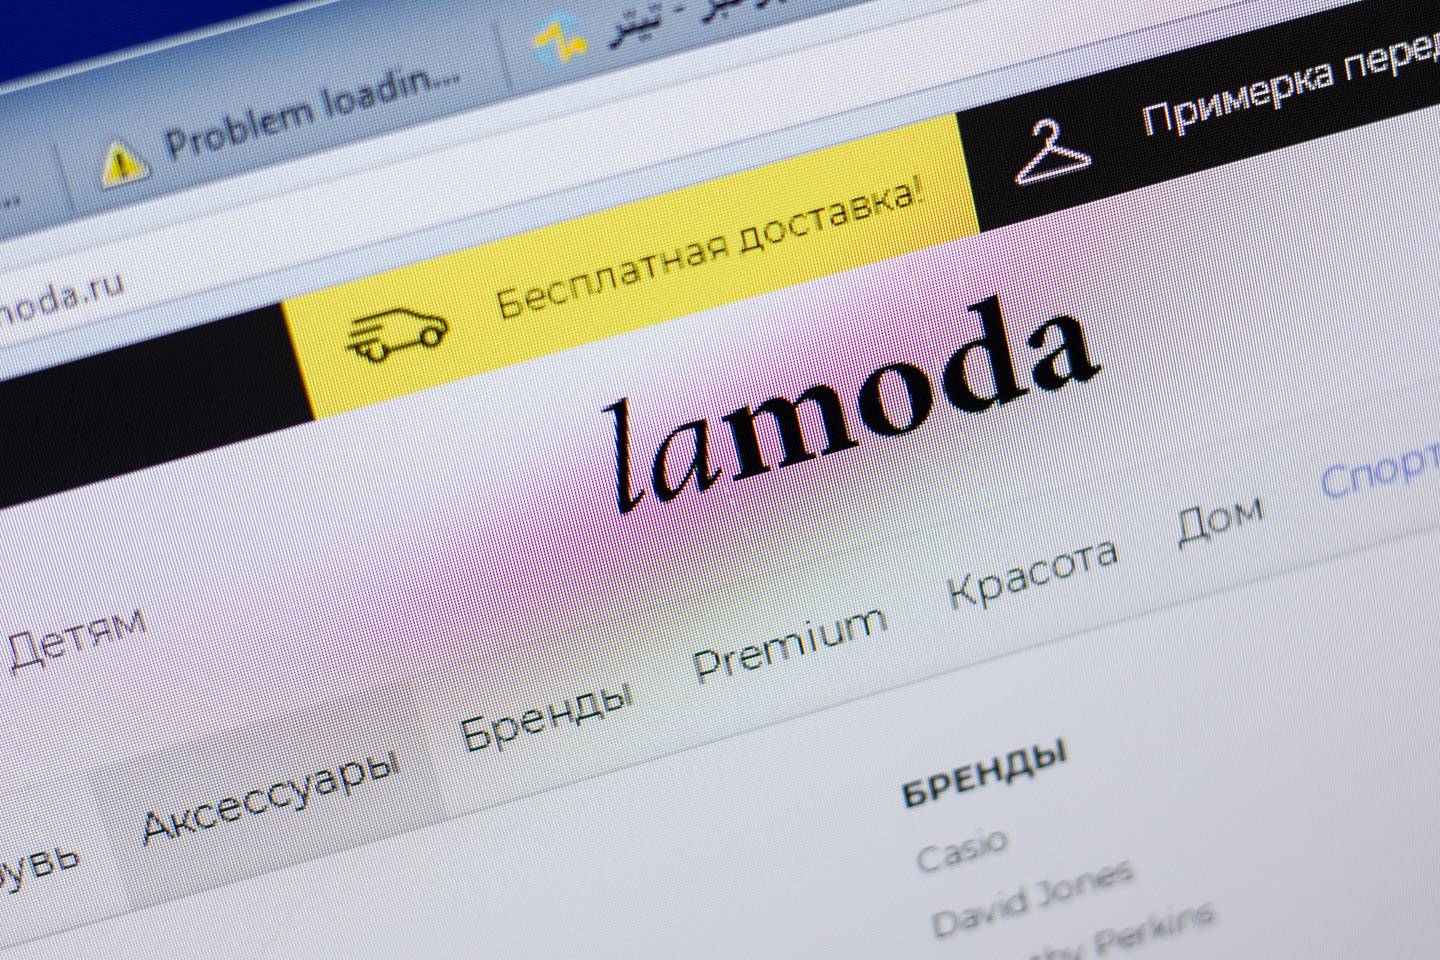 Lamoda website homepage. Shutterstock.